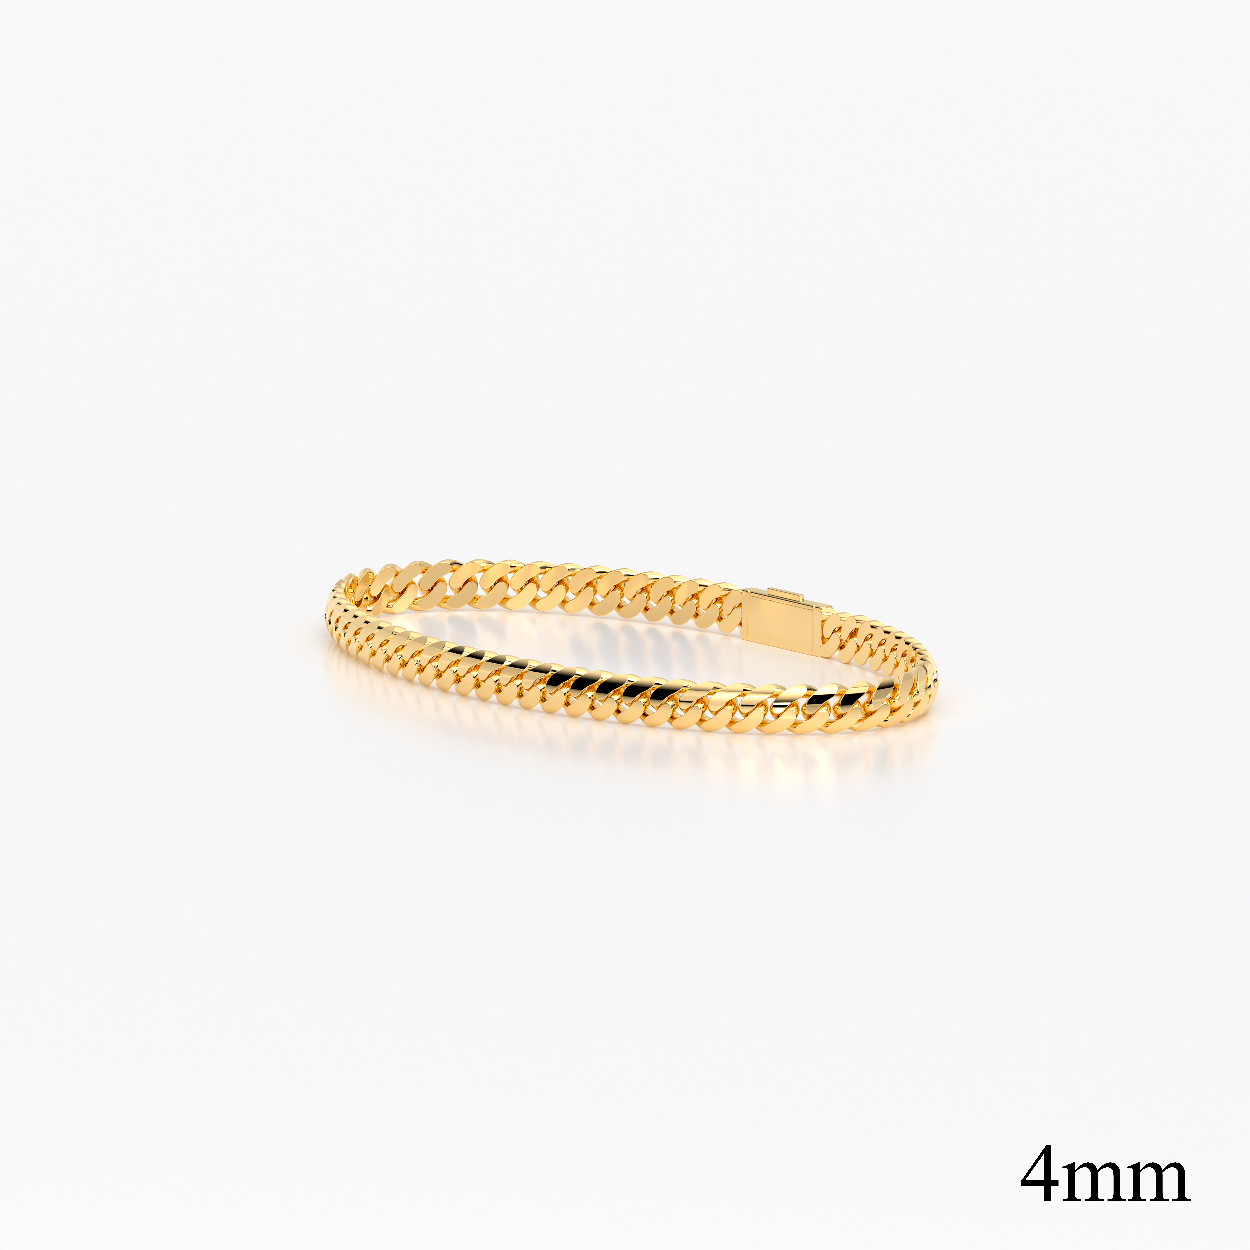 4mm Solid Gold Cuban Chain Link Bracelet